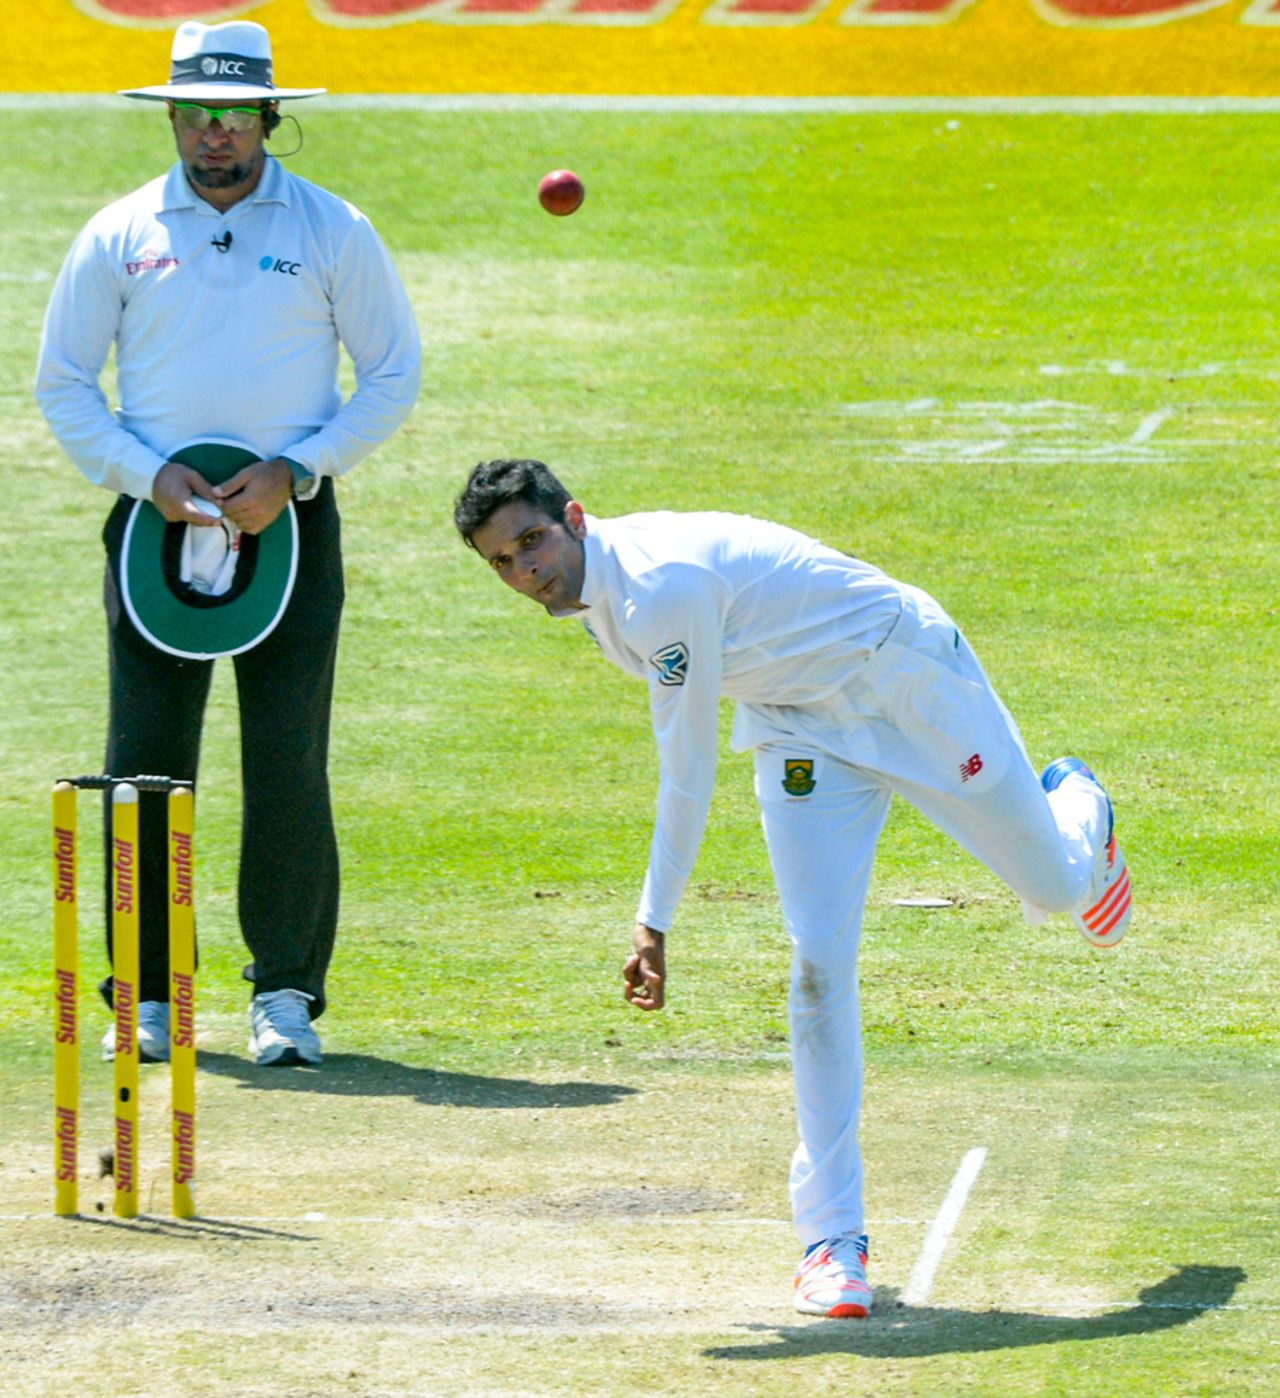 Keshav Maharaj in his delivery stride, South Africa v Sri Lanka, 1st Test, Port Elizabeth, 2nd day, December 27, 2016